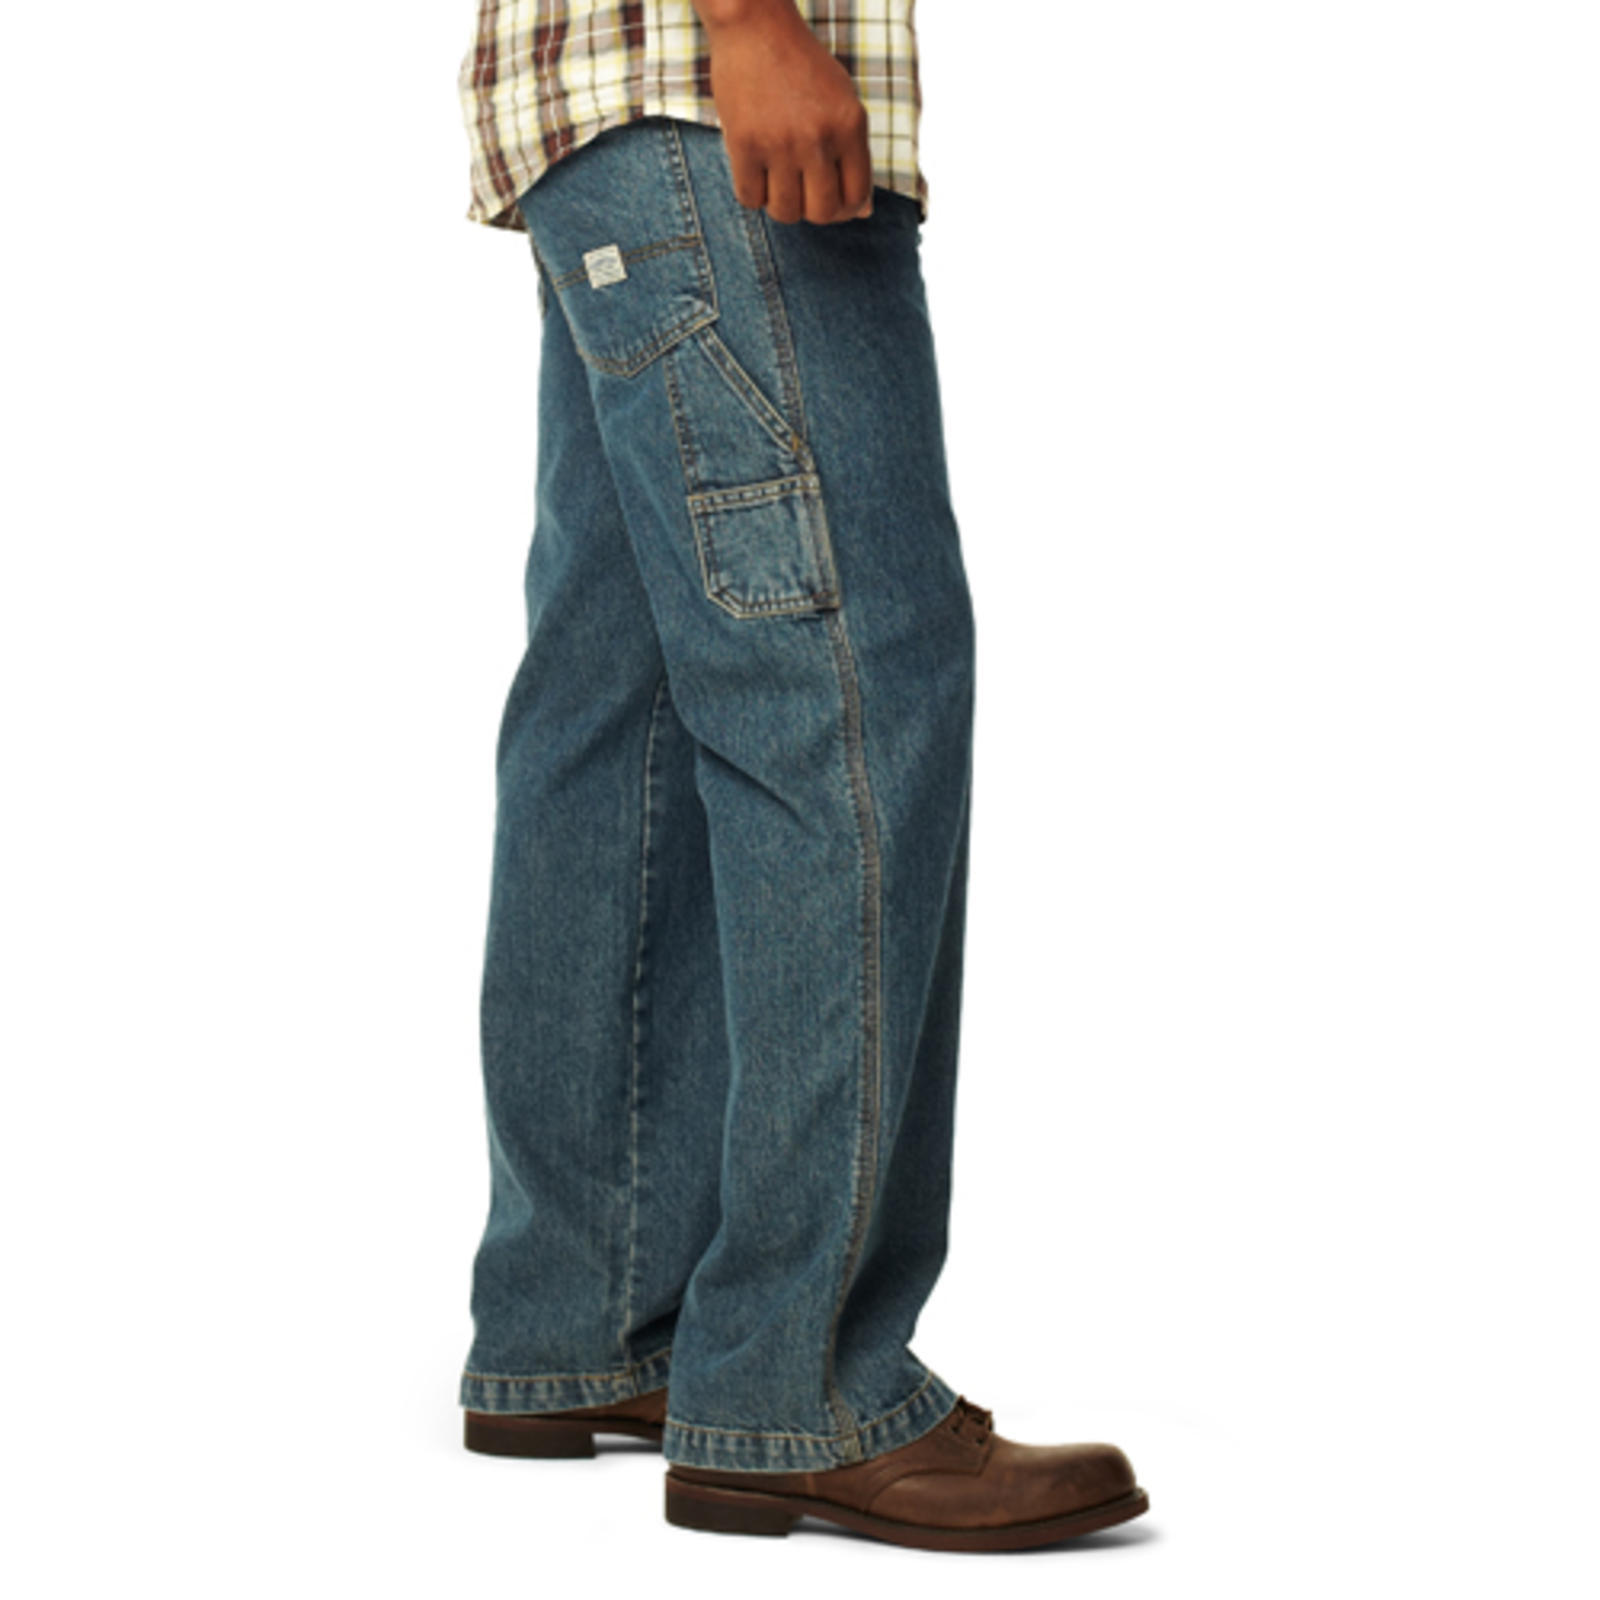 long ripped jean shorts